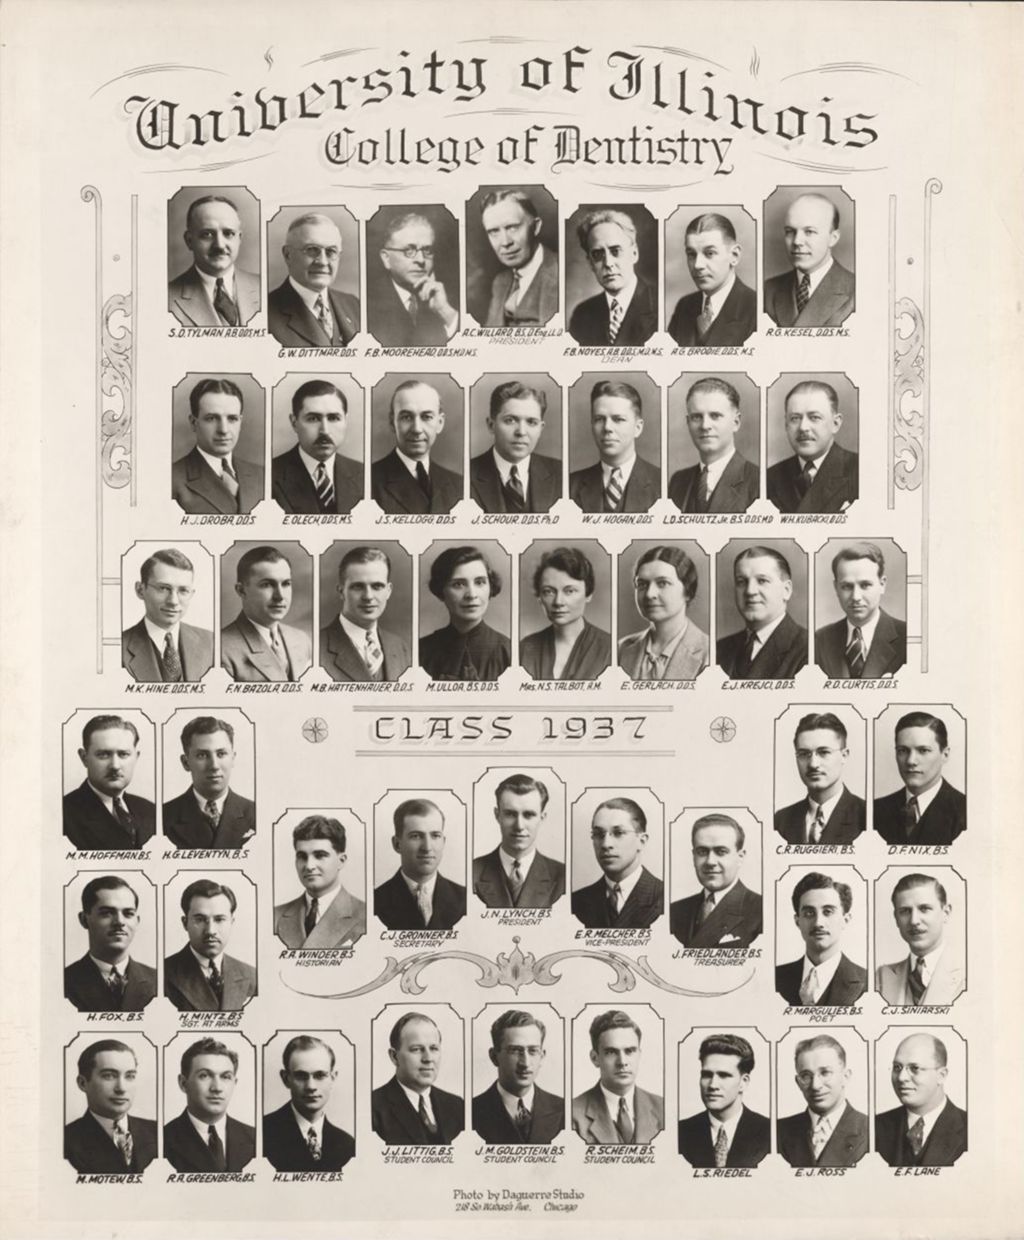 1937 graduating class, University of Illinois College of Dentistry